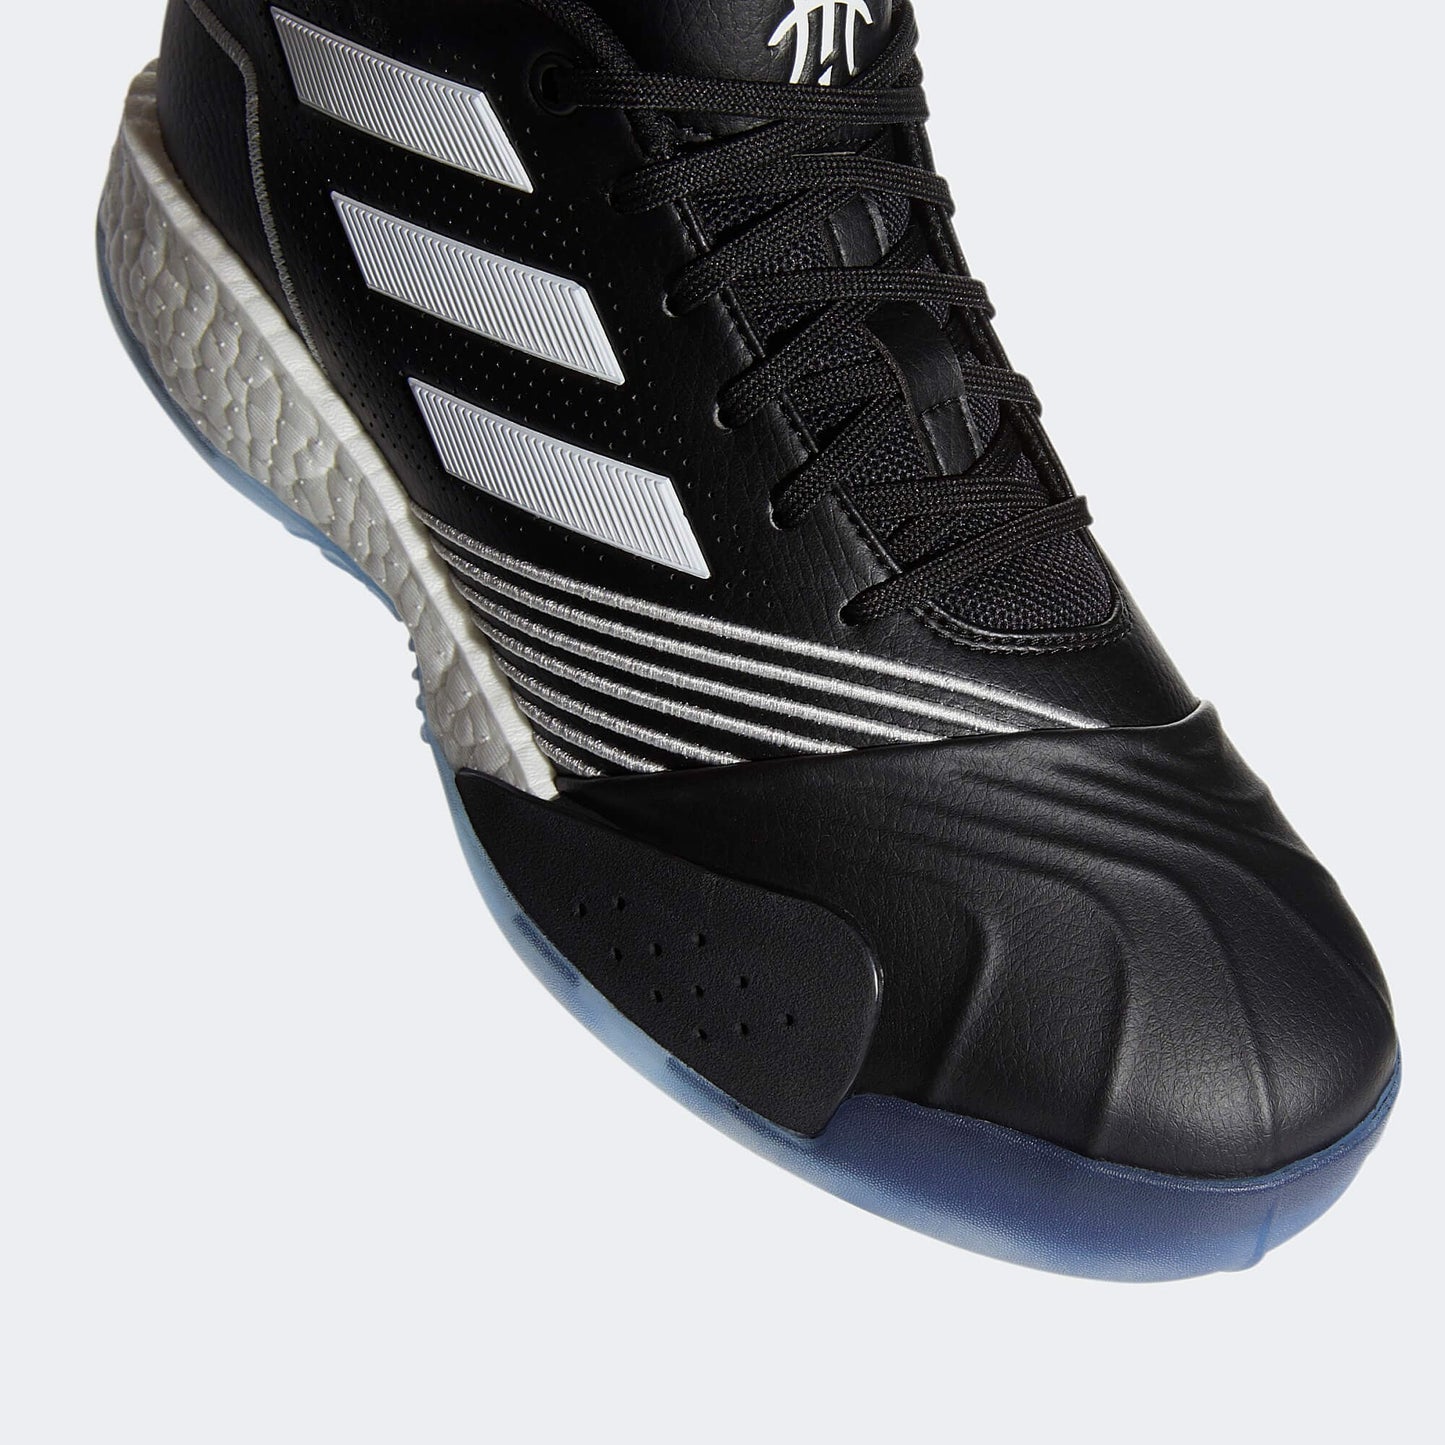 Adidas Tmac Millennium Black